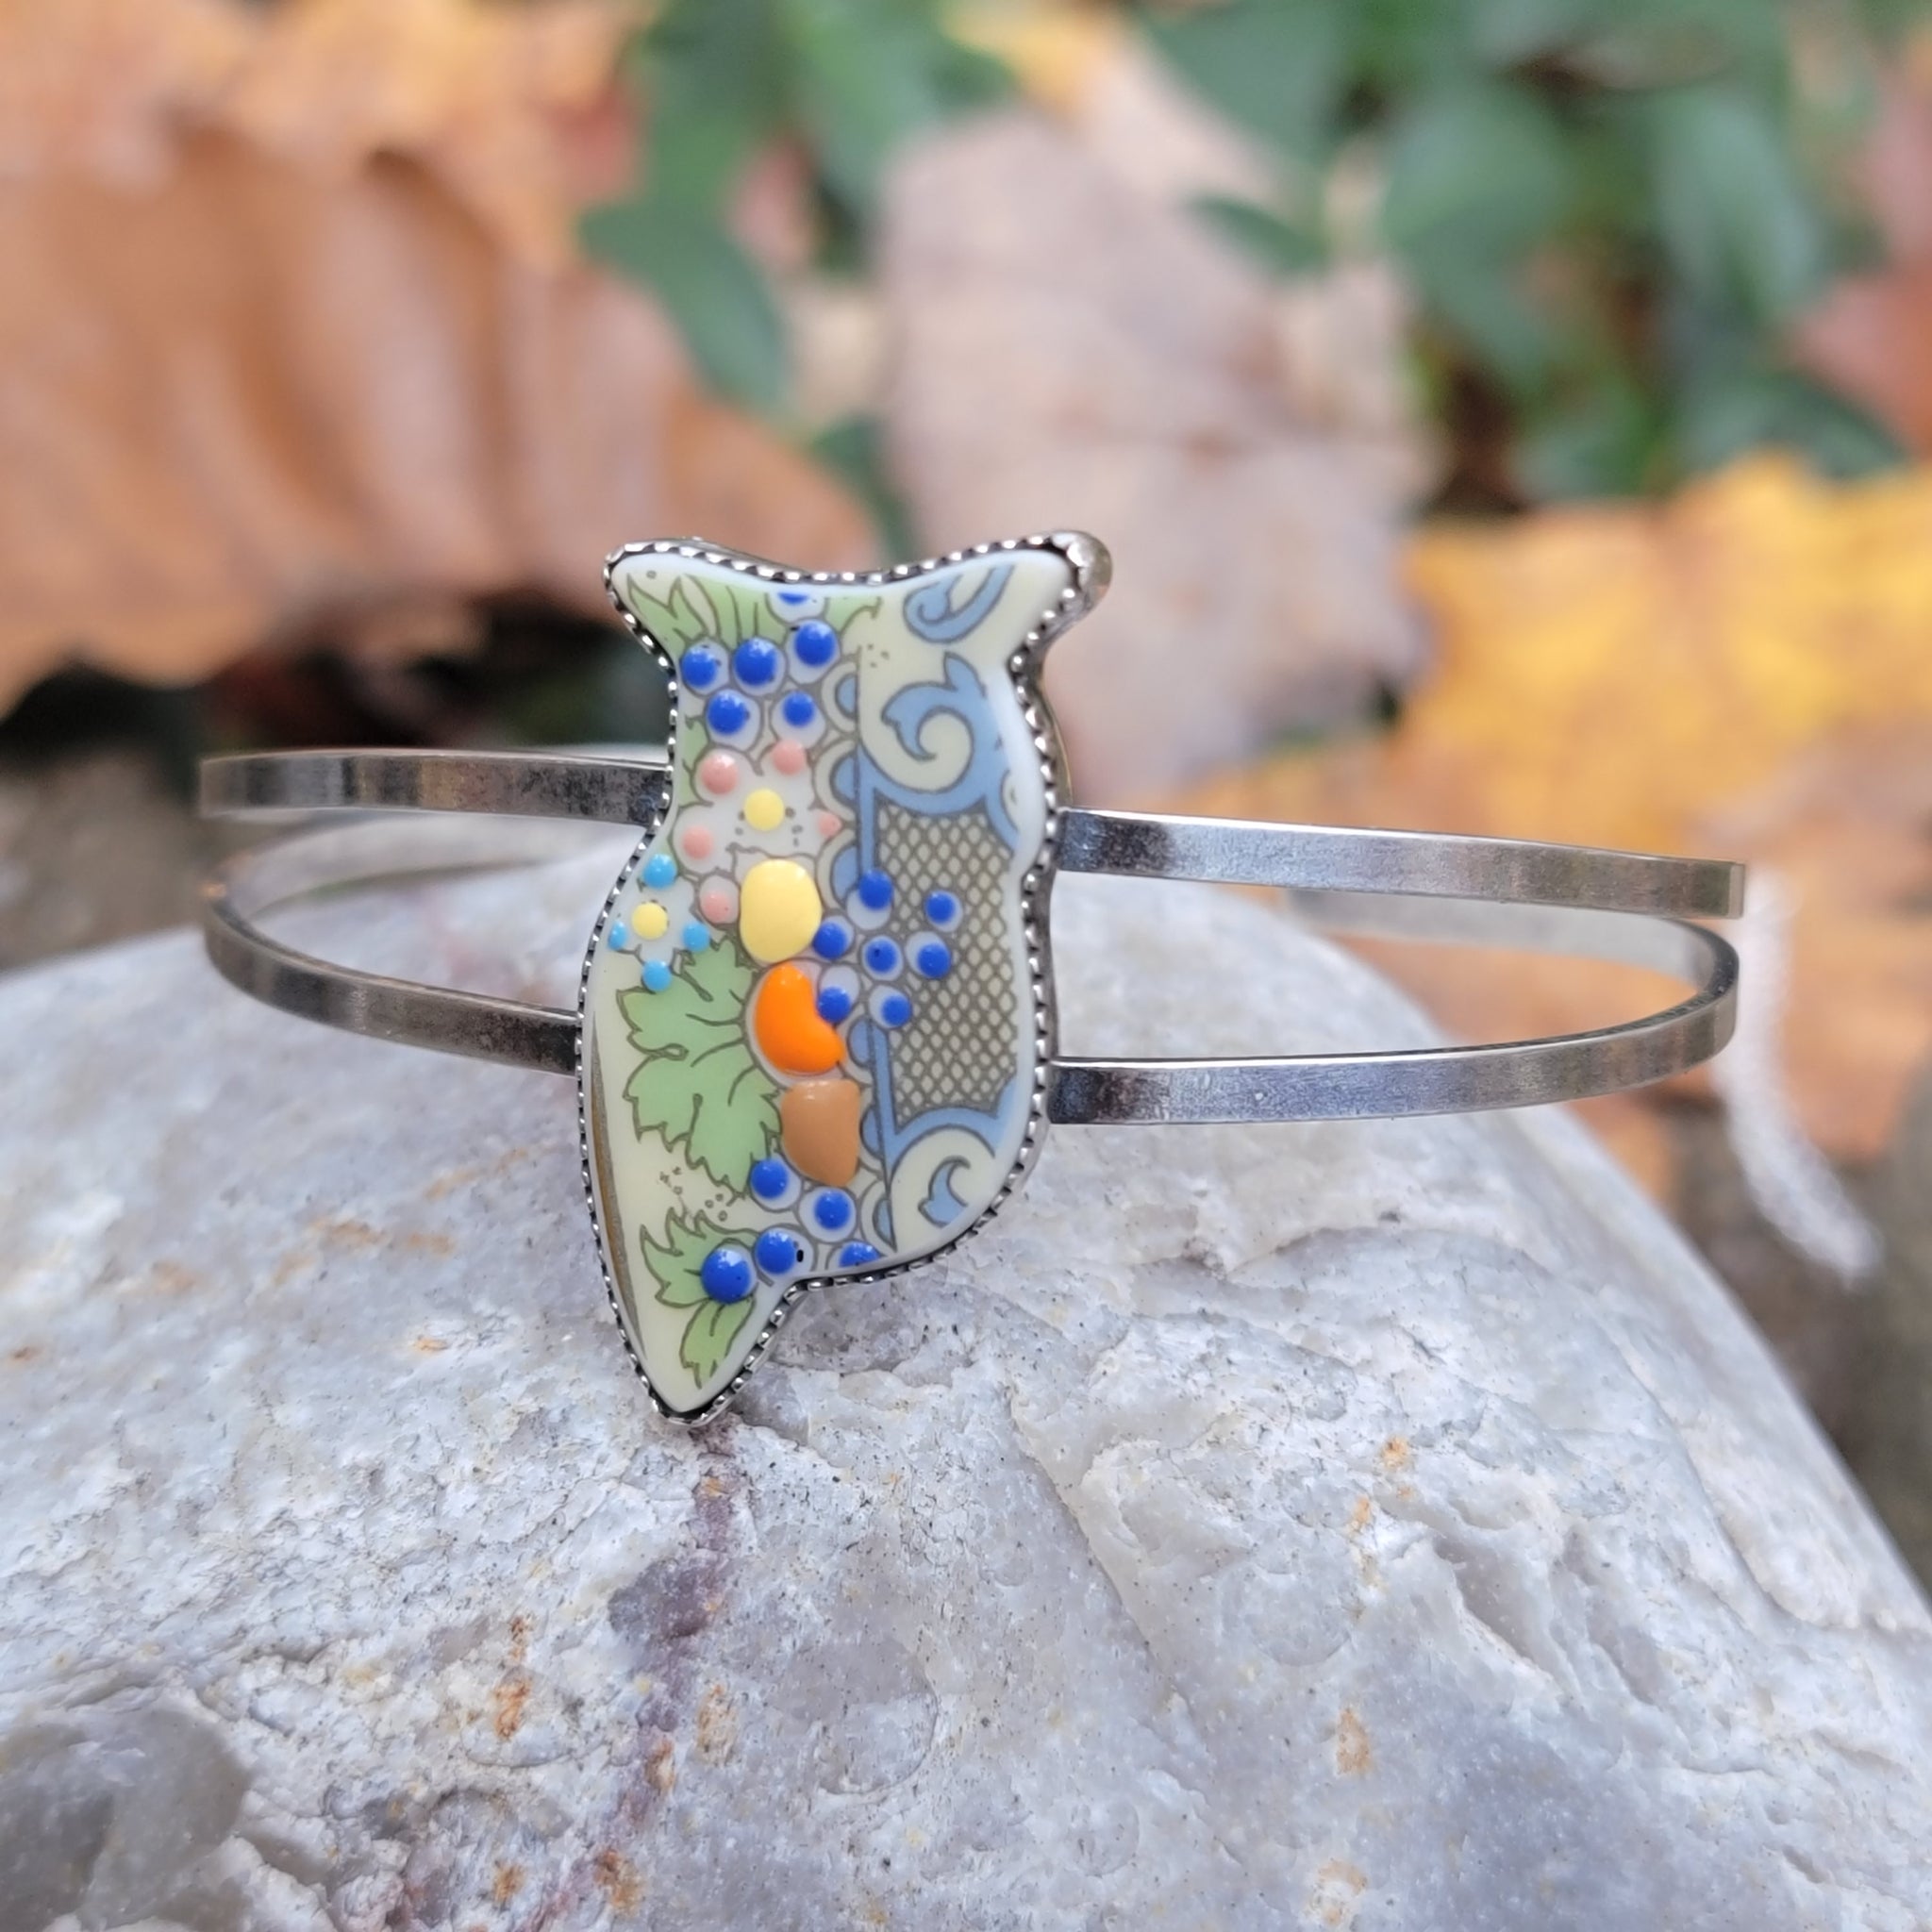 Autumnal Owl Cuff Bracelet in Sterling Silver